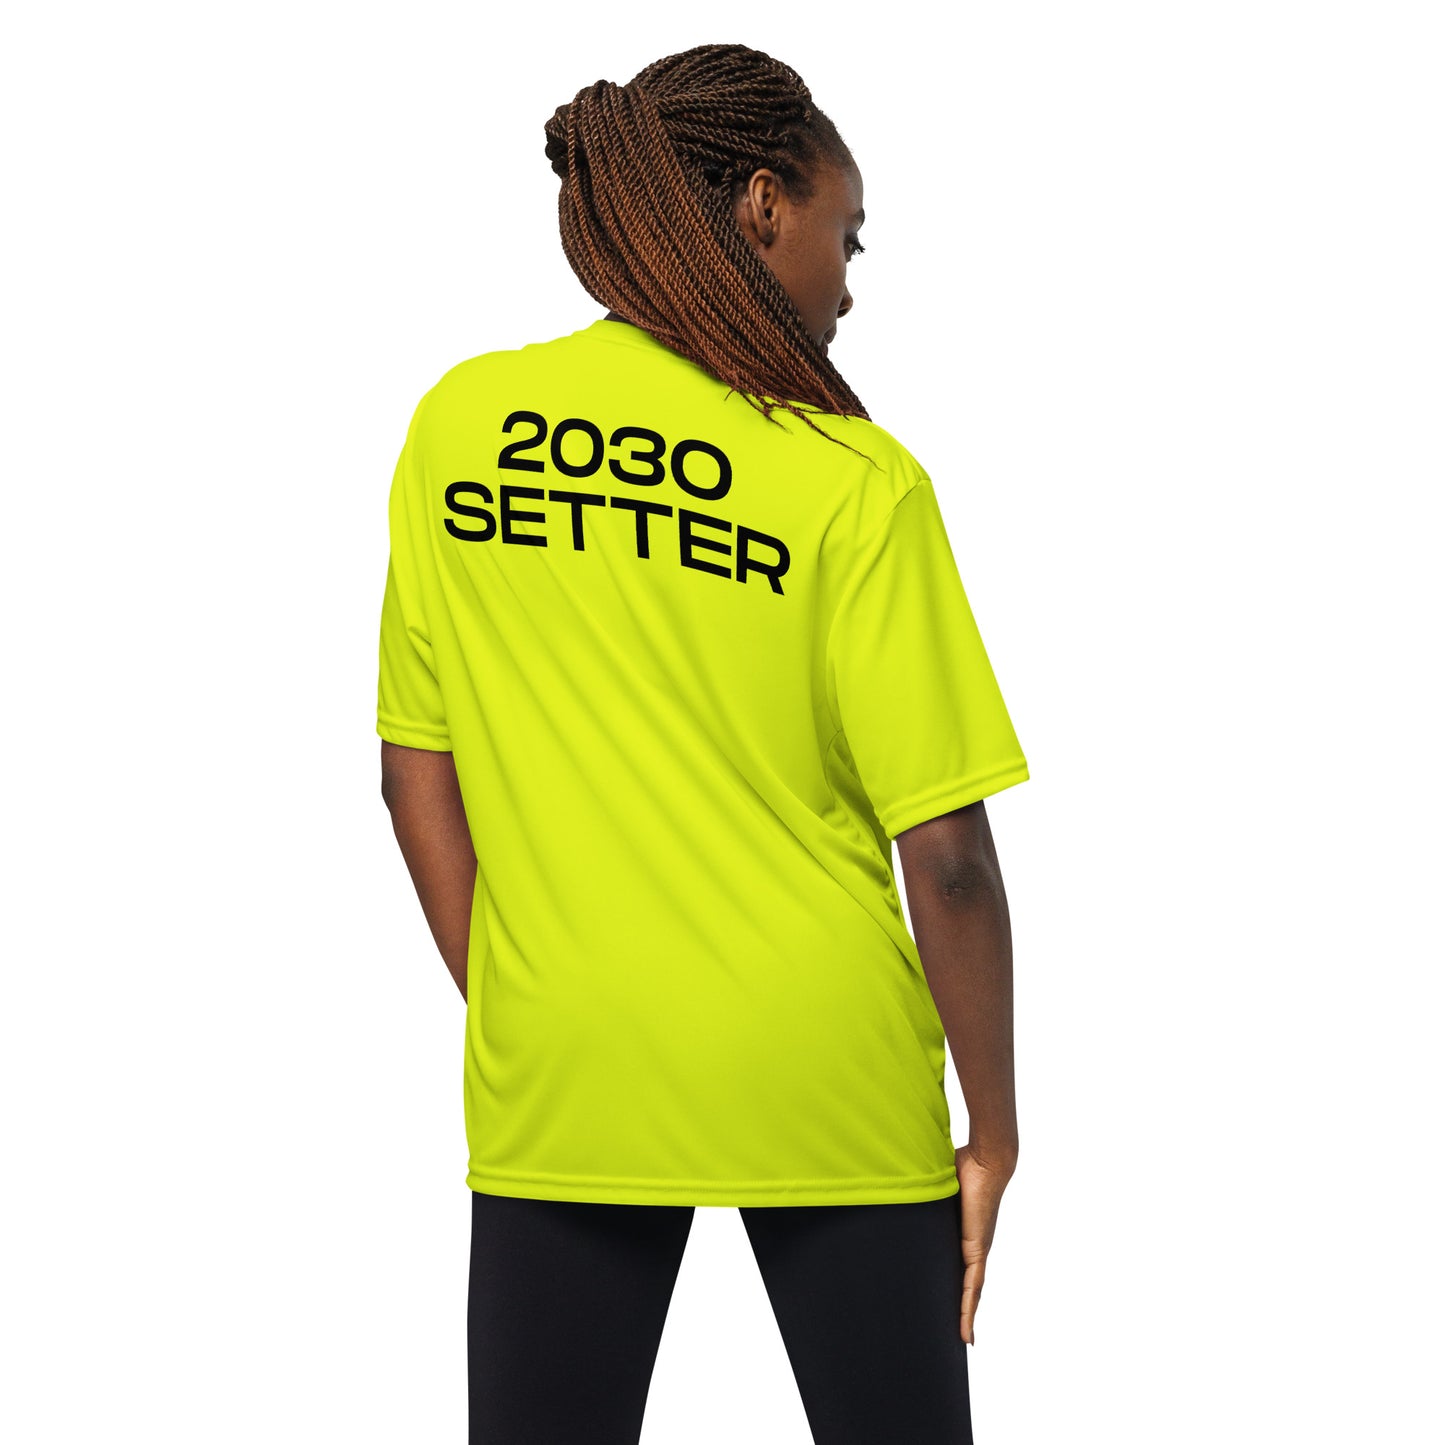 Unsigned 2030 Setter - Unisex performance crew neck t-shirt